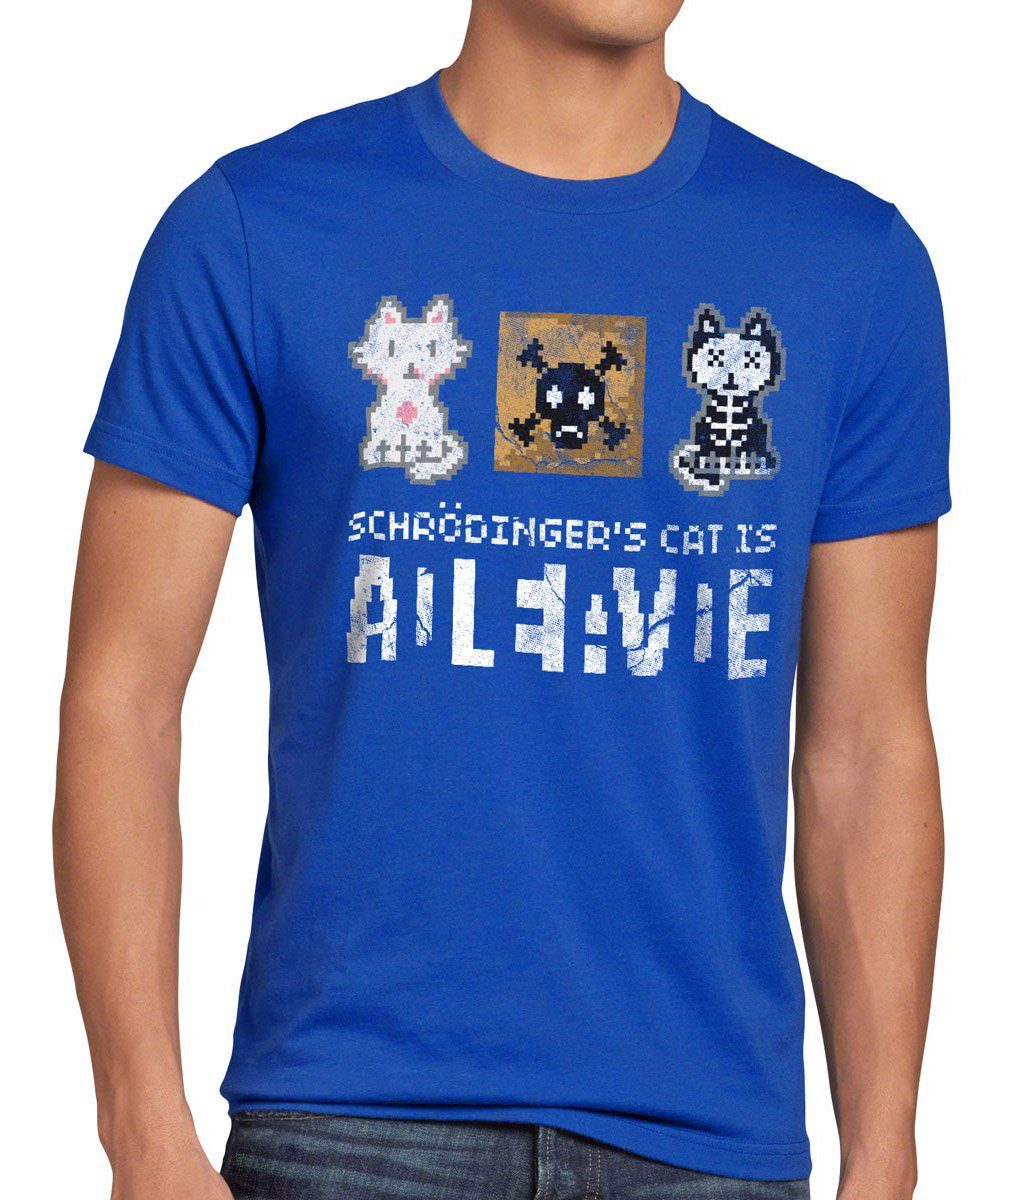 style3 Print-Shirt Herren T-Shirt 8Bit Schrödingers Katze big bang cooper cat schroedinger sheldon blau